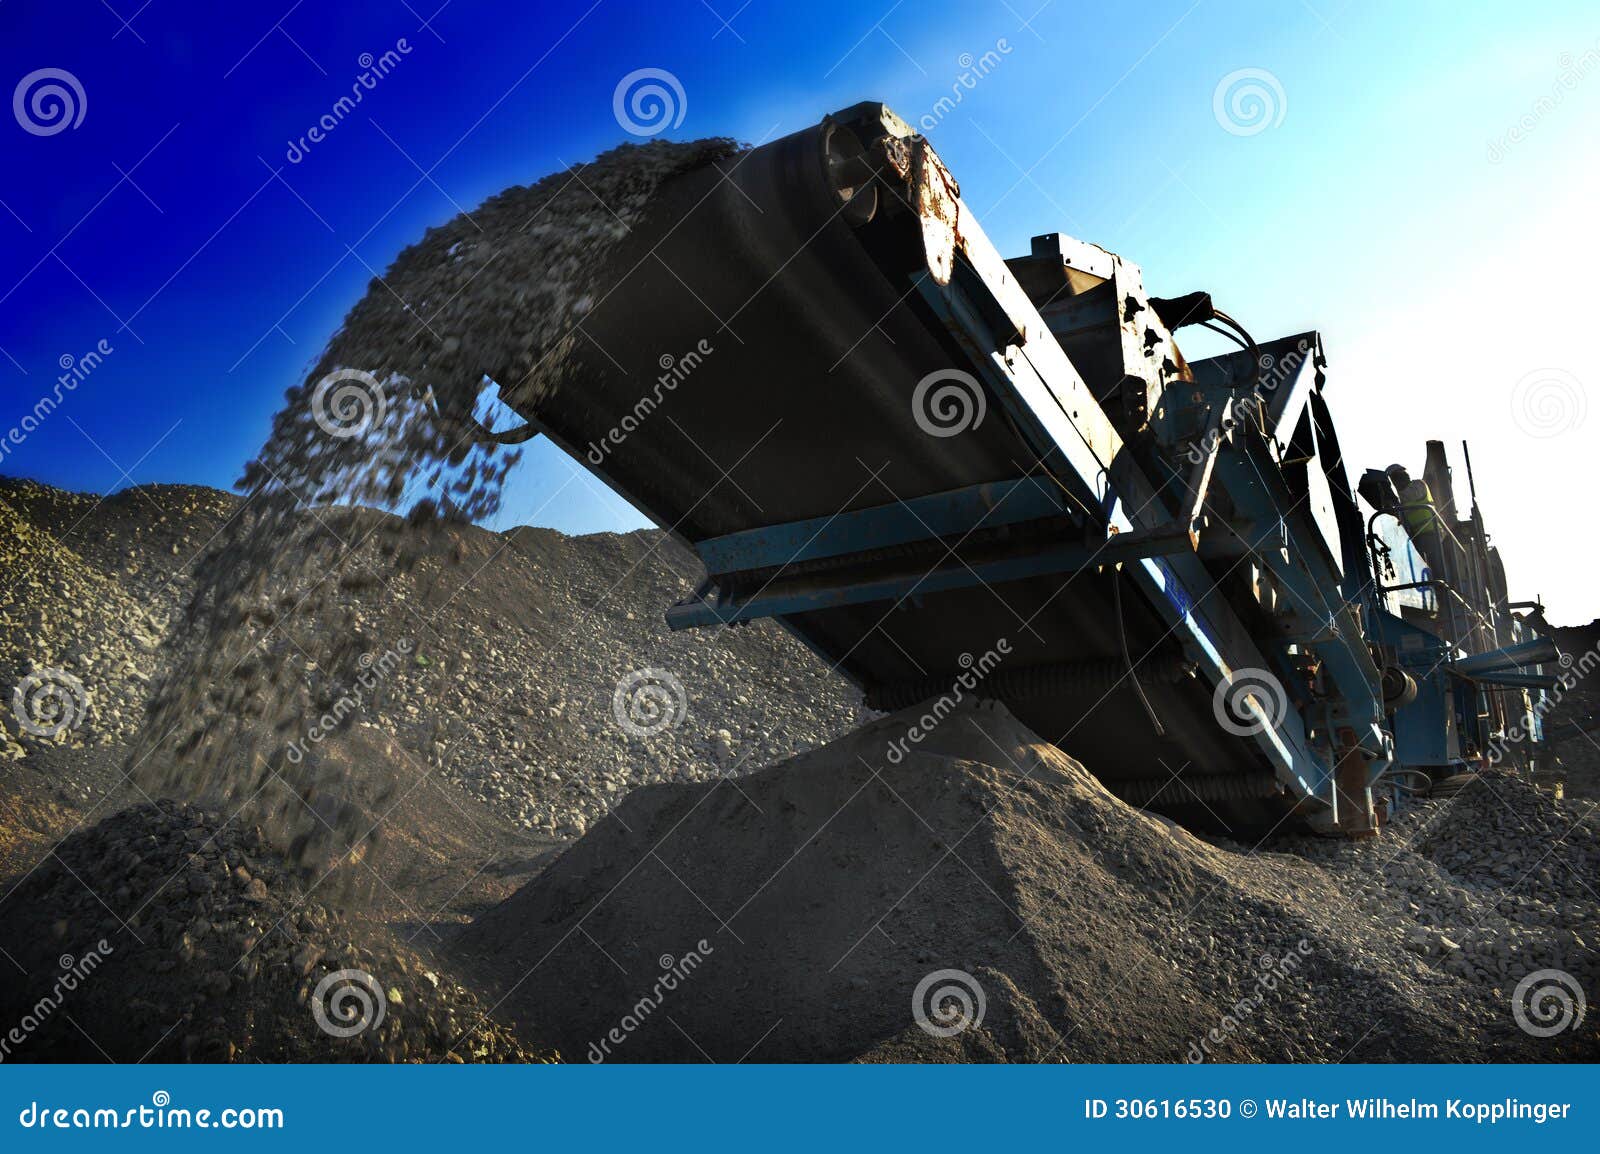 conveyor belt mining crusher